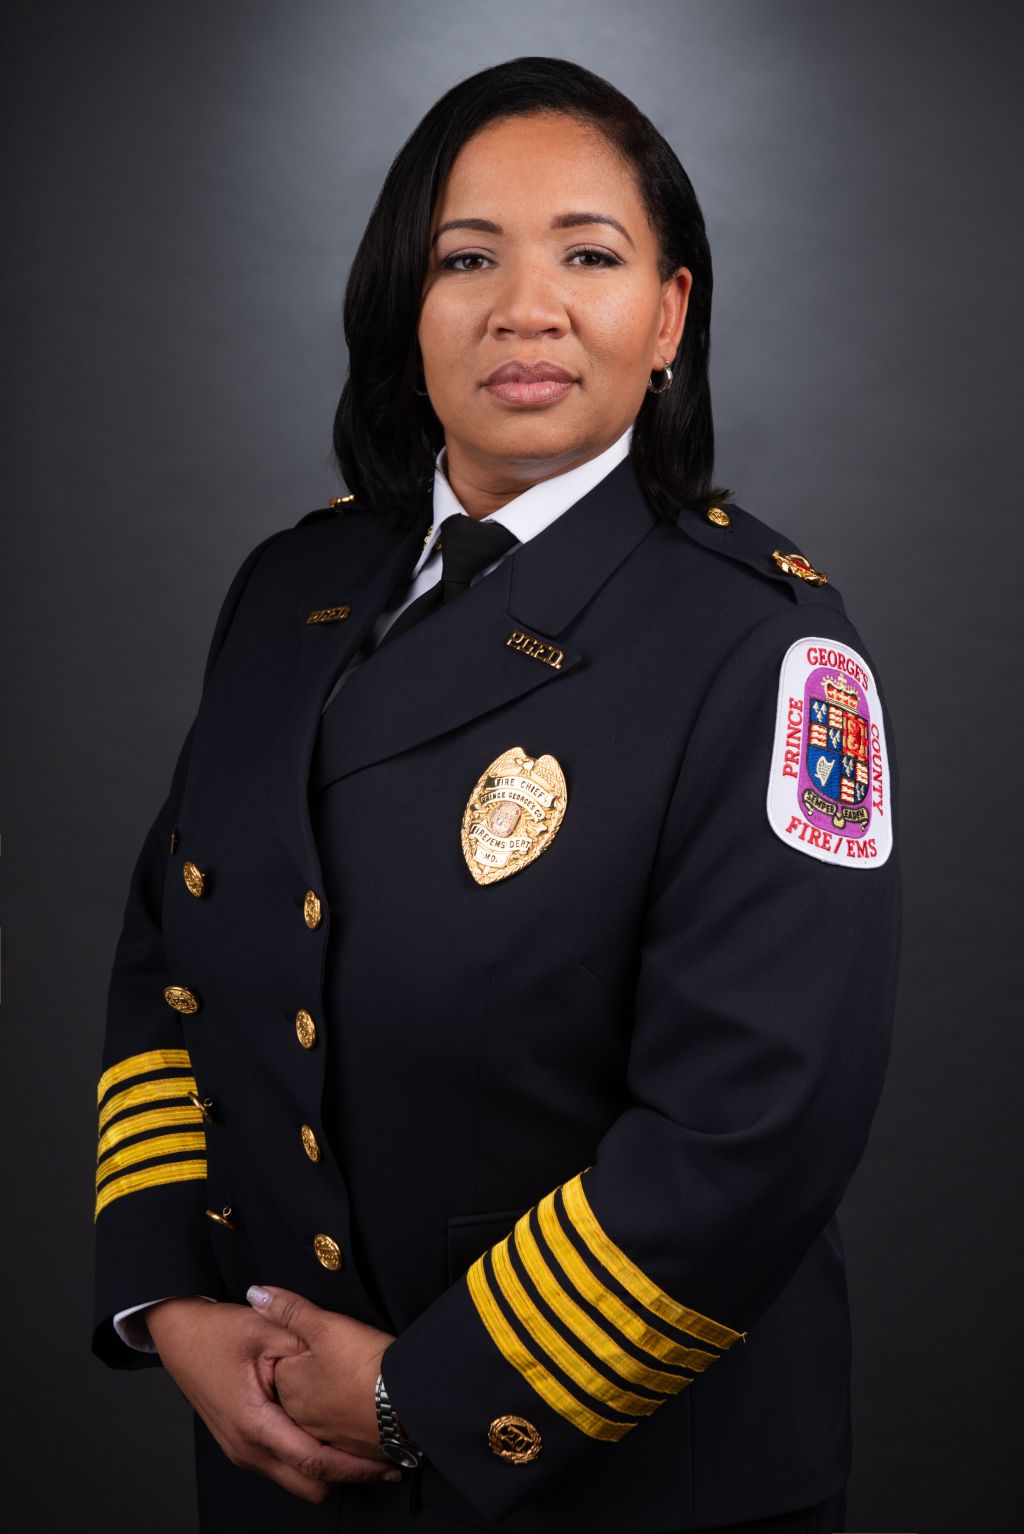 Fire Chief Tiffany D. Green